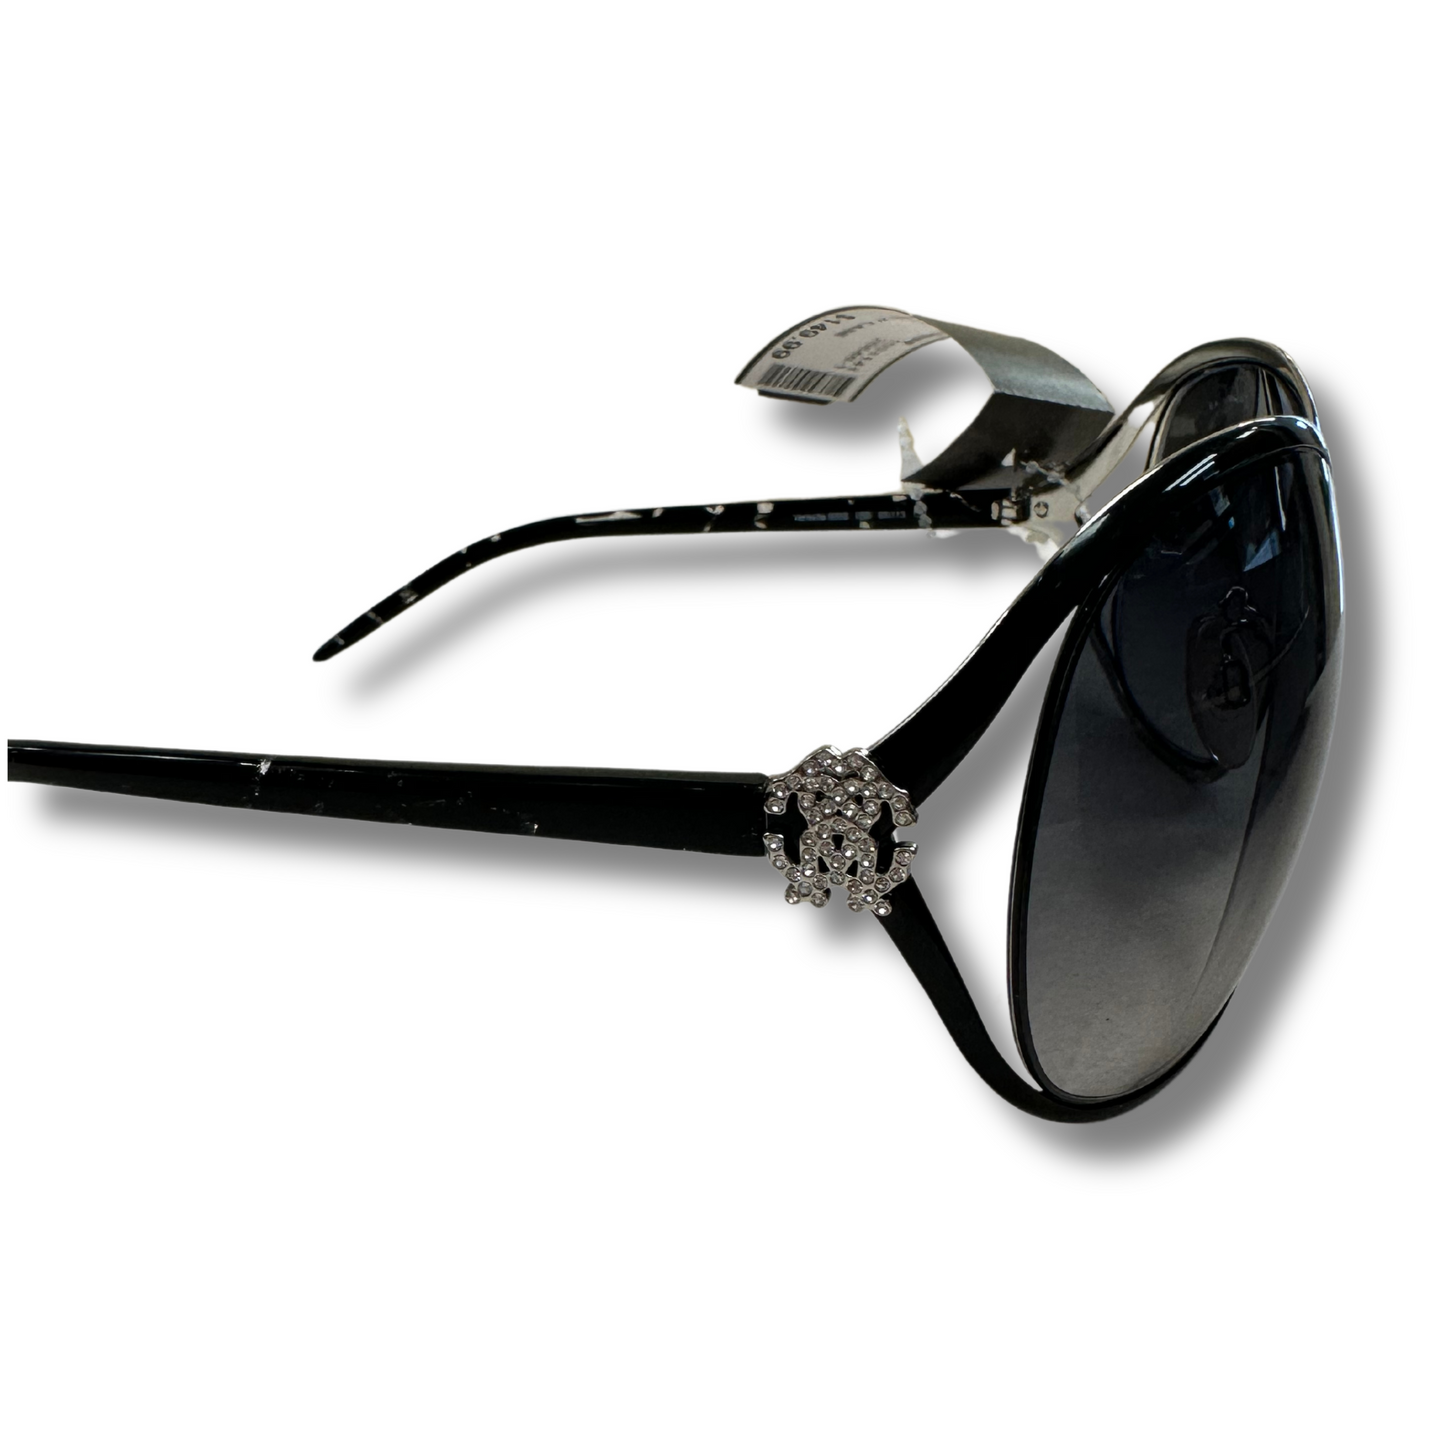 ROBERTO CAVALLI Large Oval Frame Sunglasses